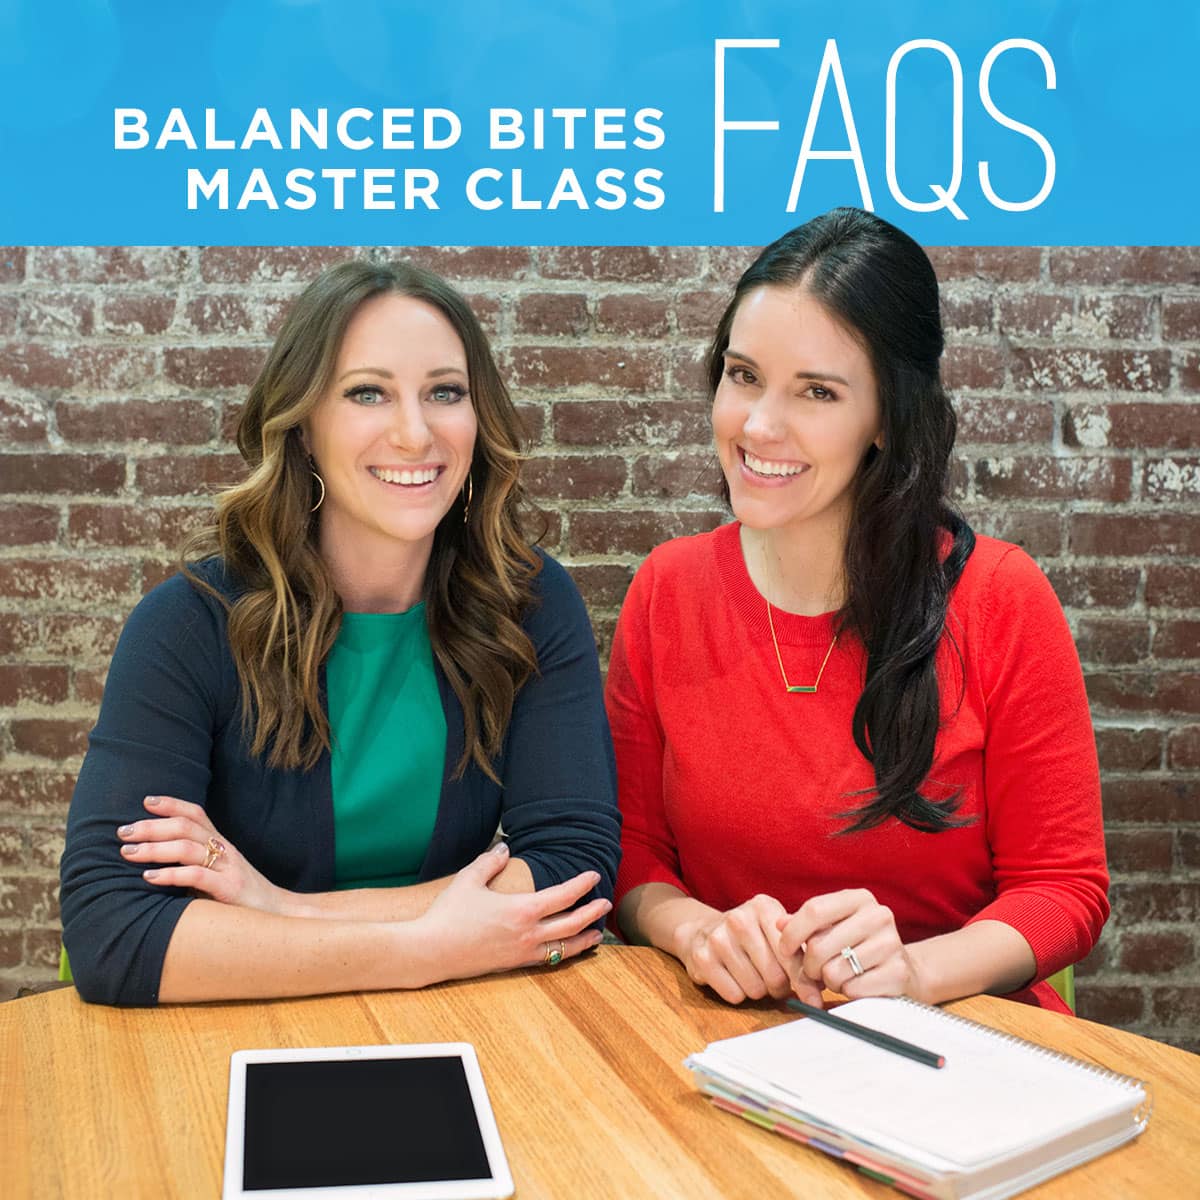 Balanced Bites Master Class FAQs